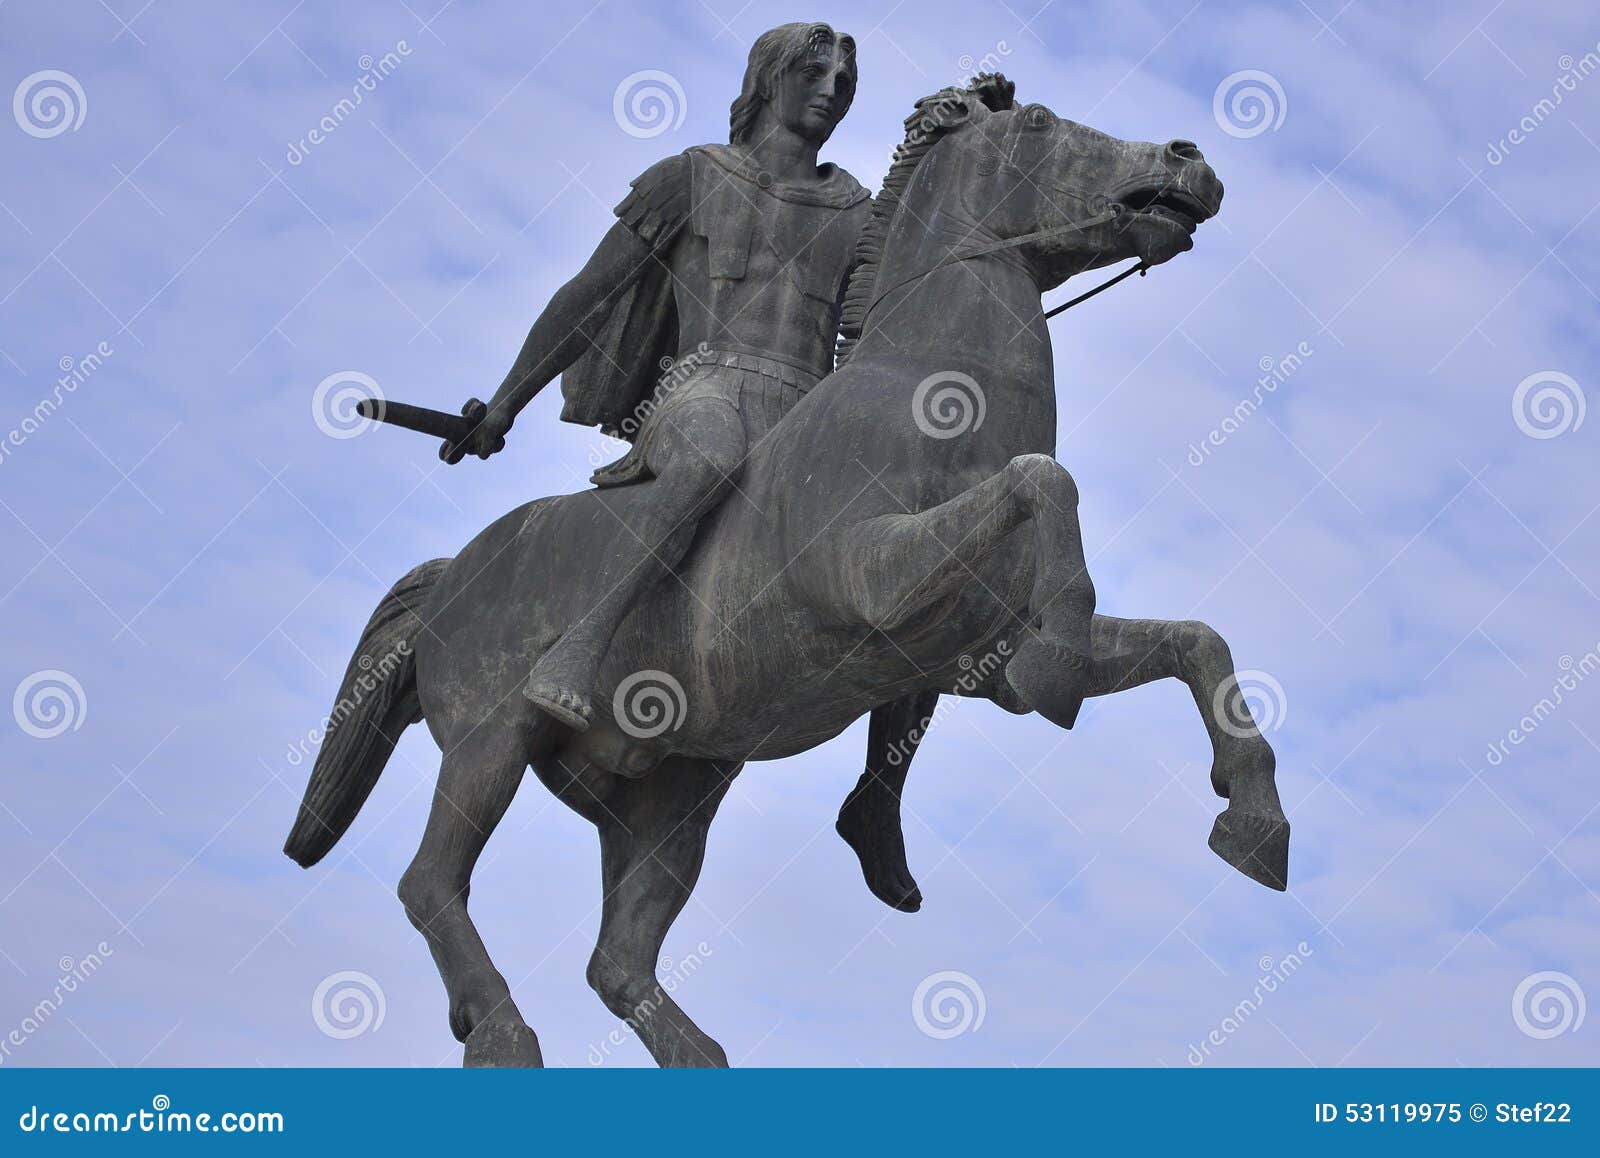 statue of alexander the great, thessaloniki, greece